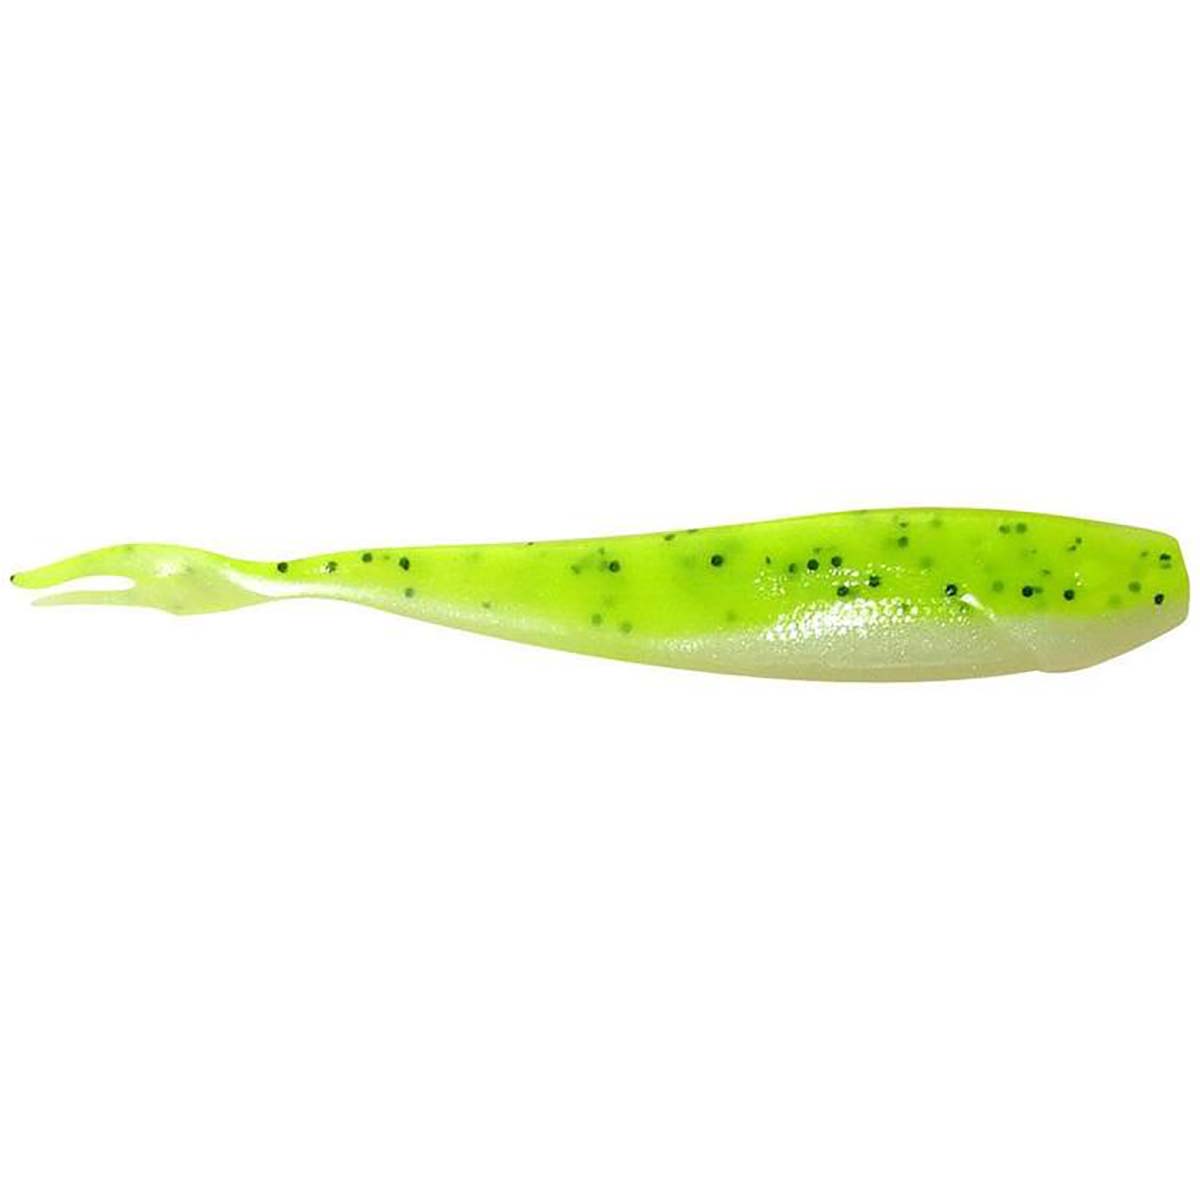 Berkley Gulp! Minnow Soft Plastic Lure 4in Chartreuse